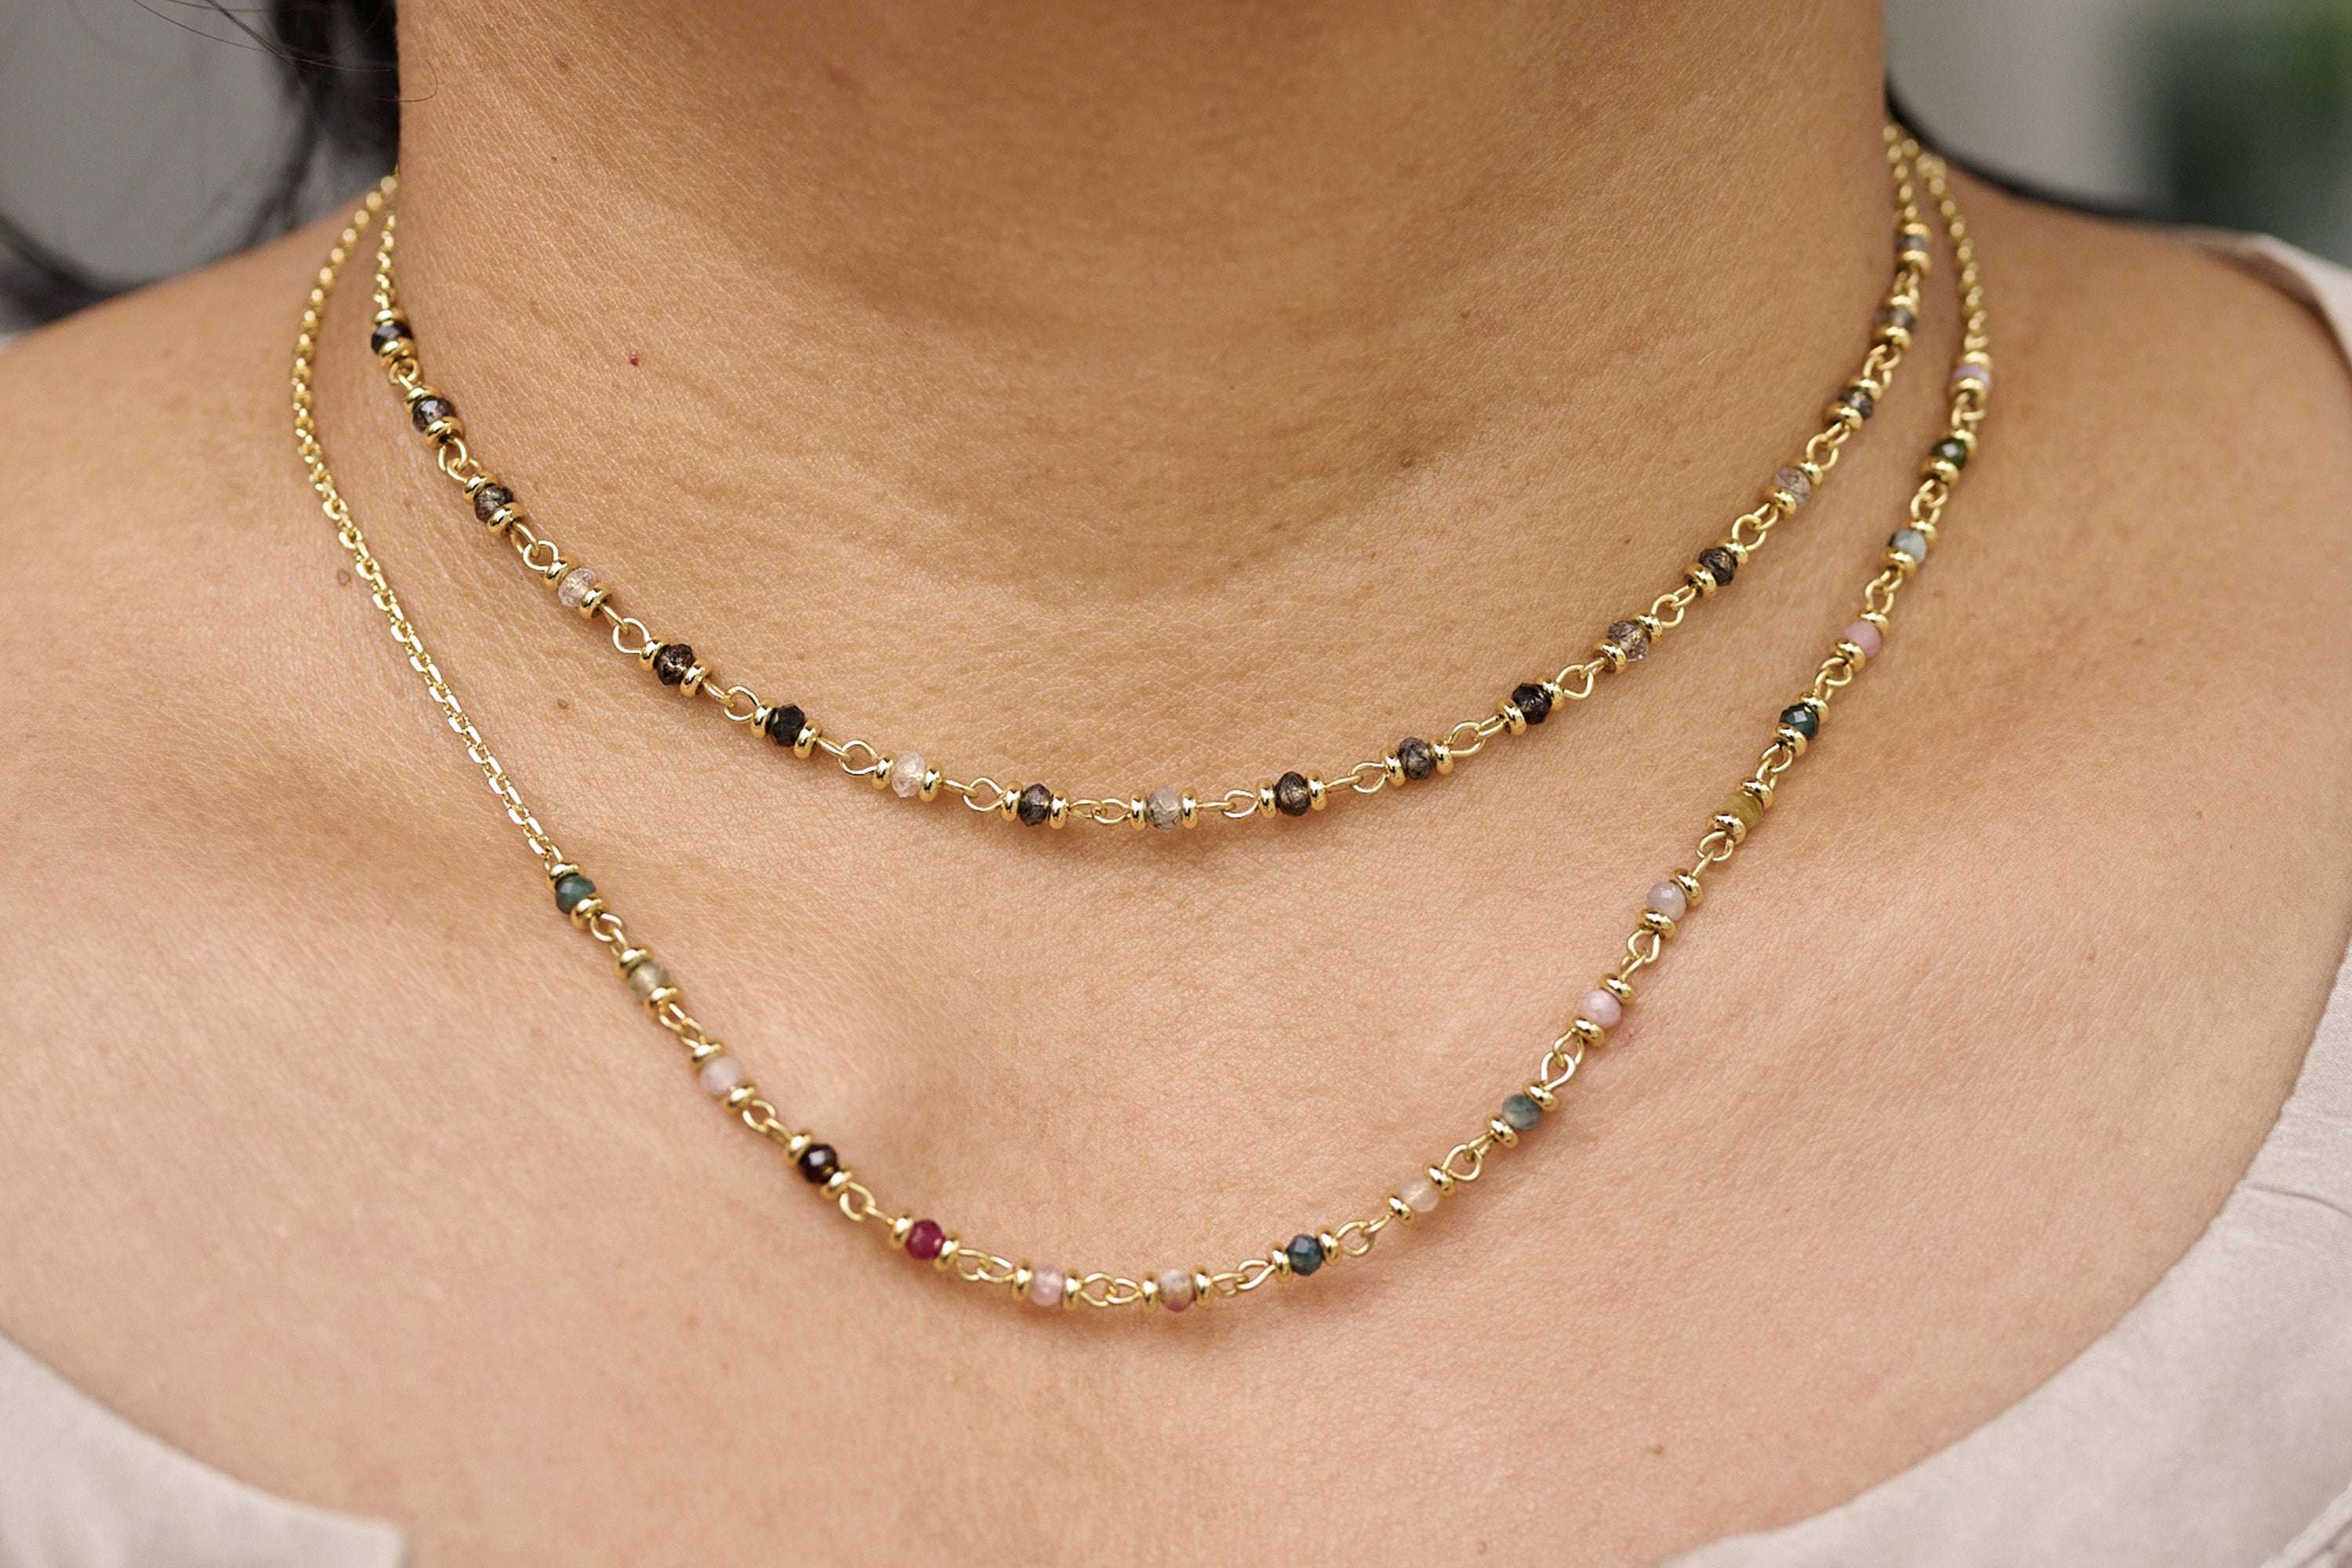 Necklaces with gemstones for women - L'Atelier d'Amaya